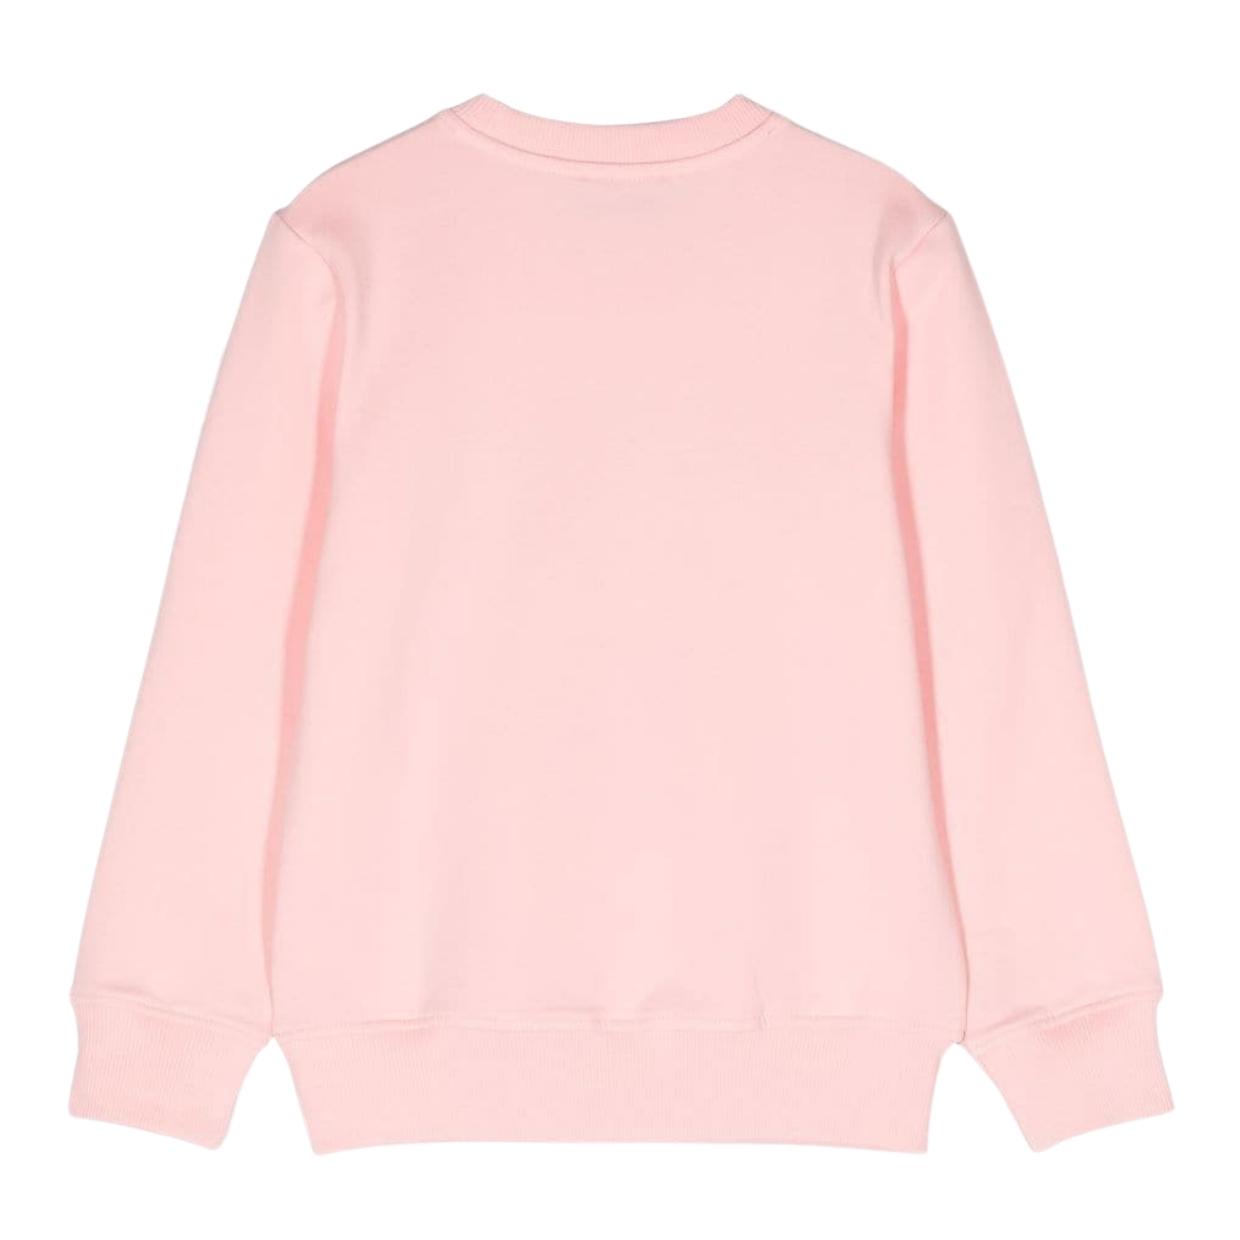 Moschino Kids Pink Teddy Bear Sweatshirt